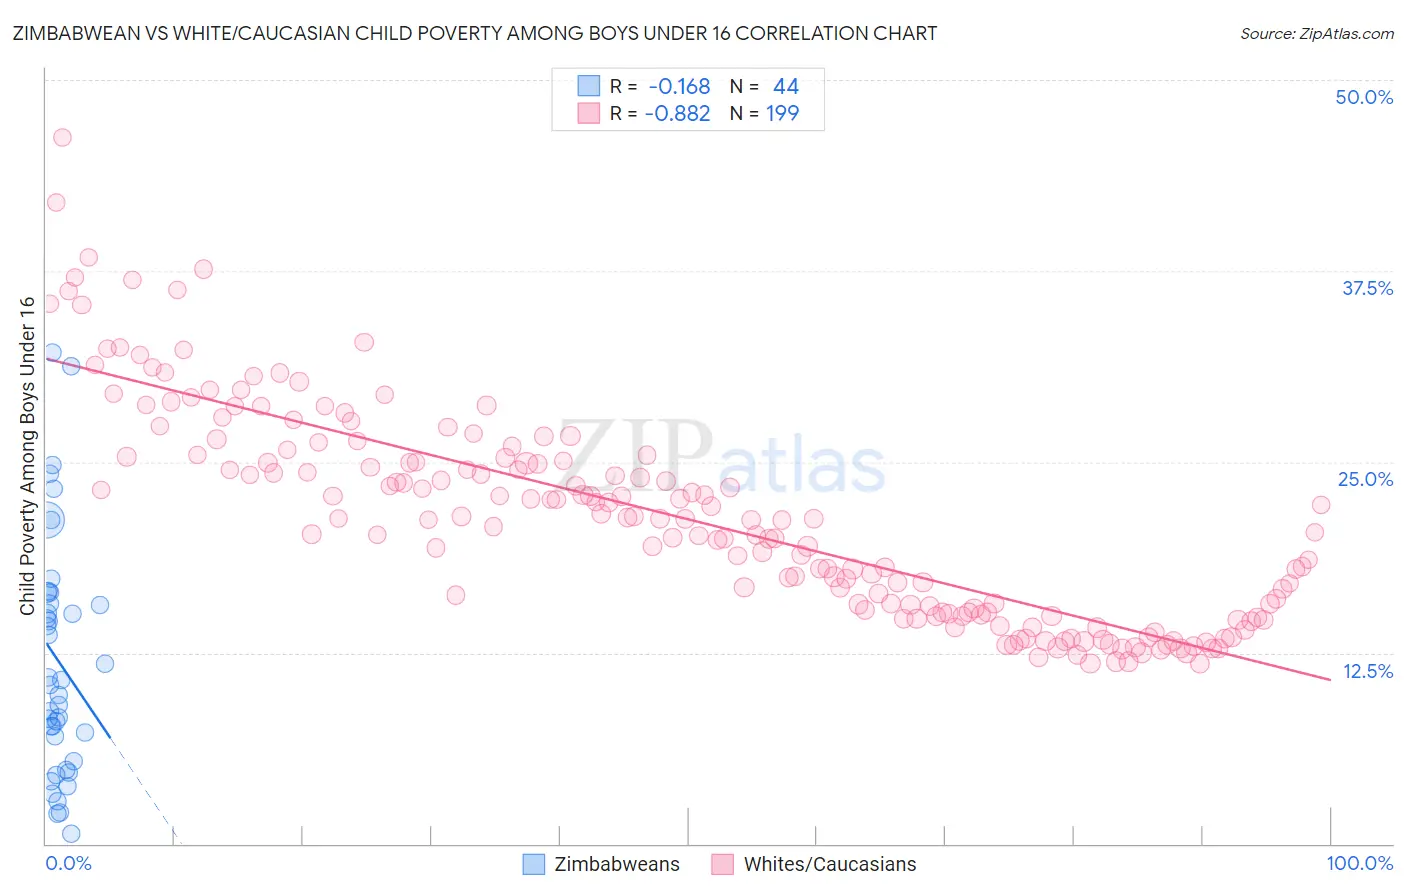 Zimbabwean vs White/Caucasian Child Poverty Among Boys Under 16